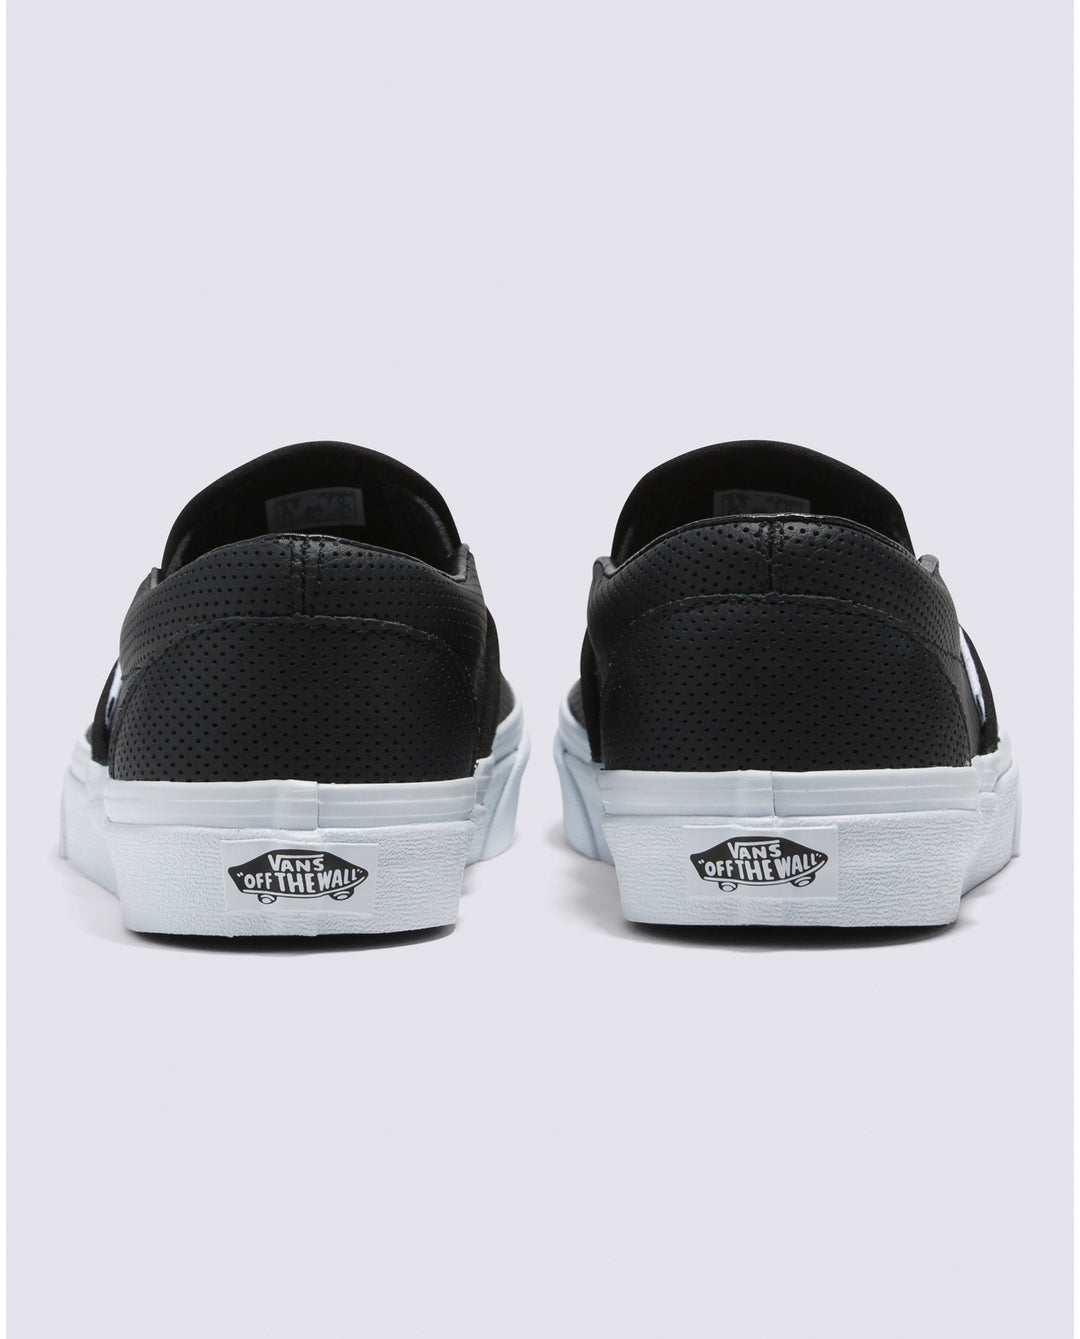 Vans Slip-On Perf Leather Shoe - Black - Sun Diego Boardshop